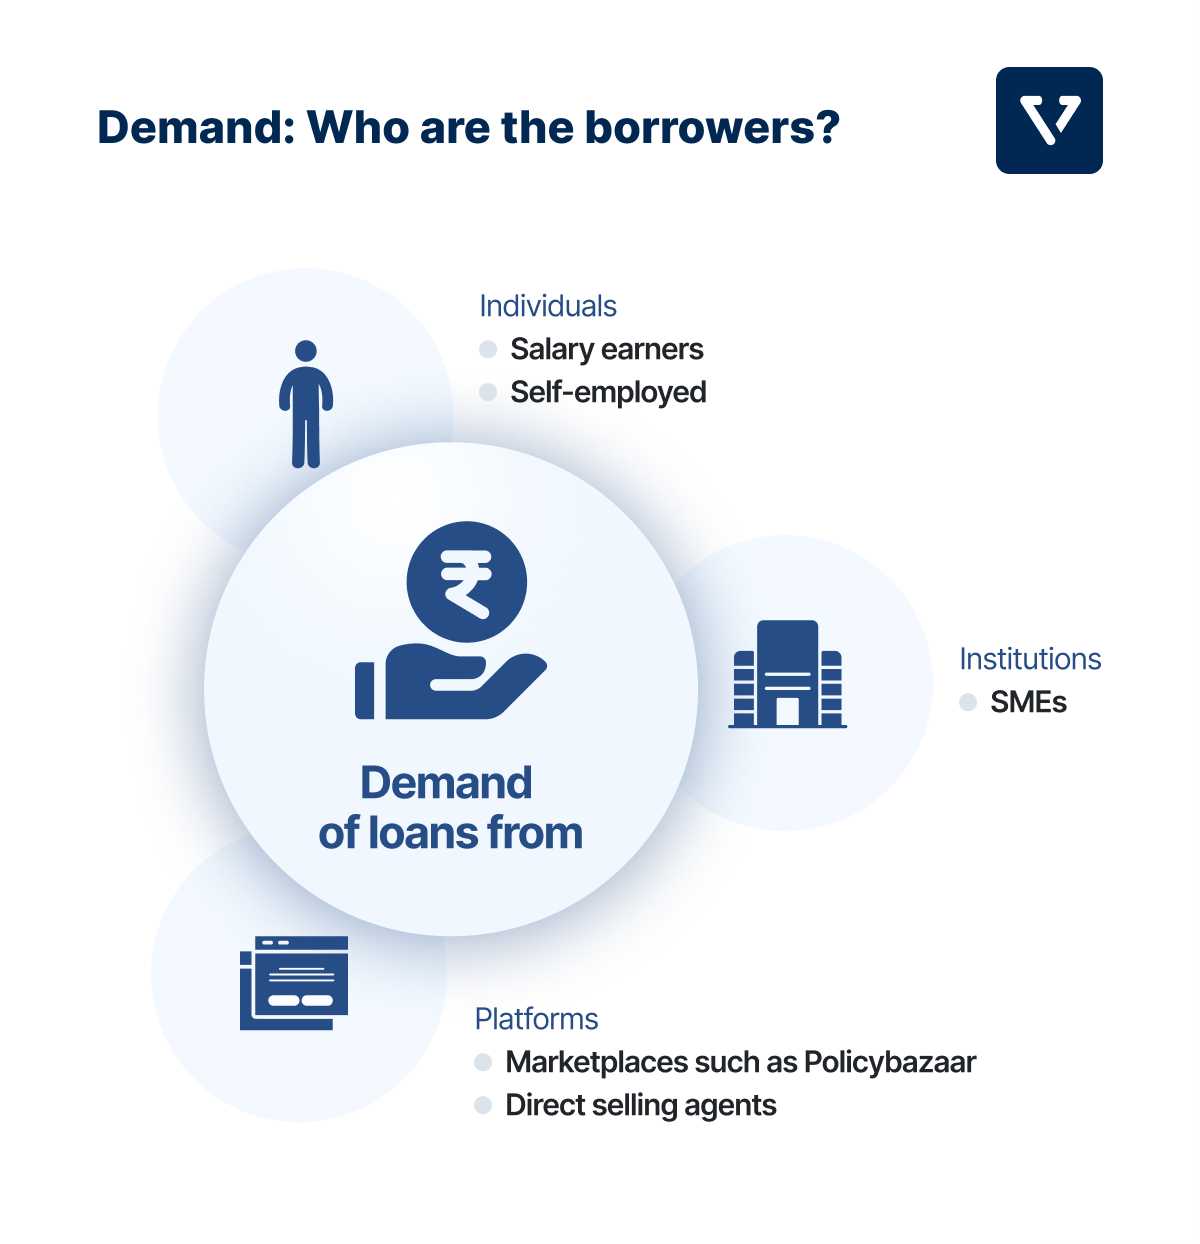 Figure 1: Demand of loans